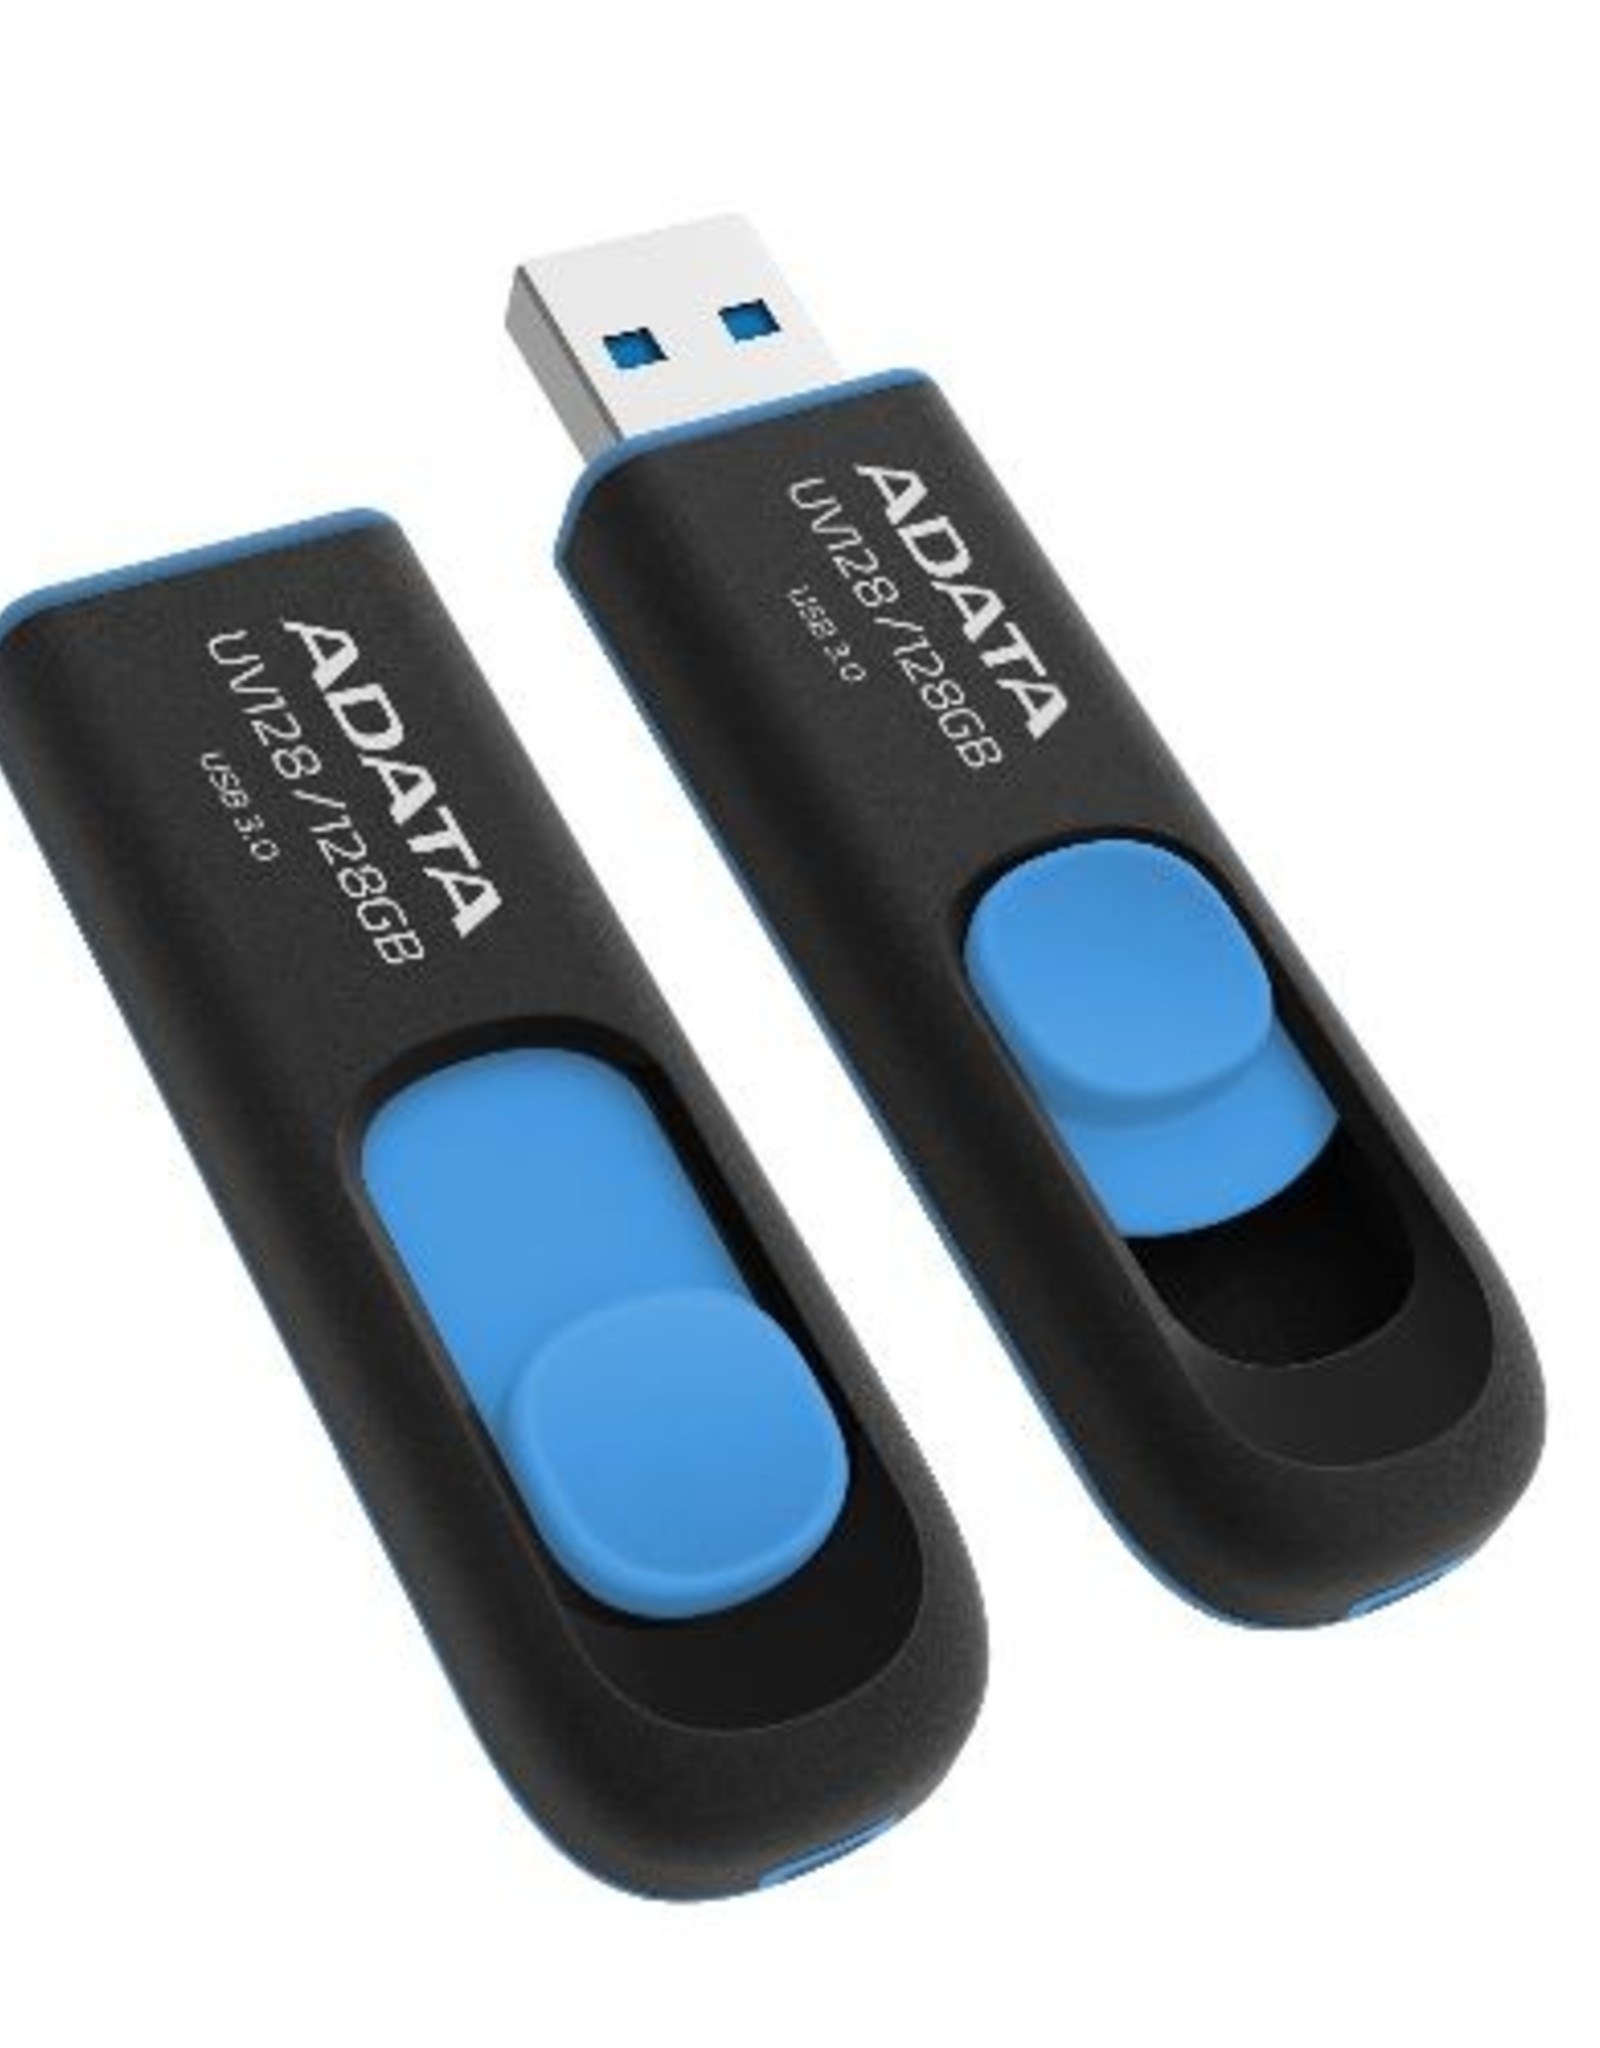 ADATA ADATA USB3.0 MEMORY PEN (UV128), 128GB, RETRACTABLE, SCRATCH-PROOF